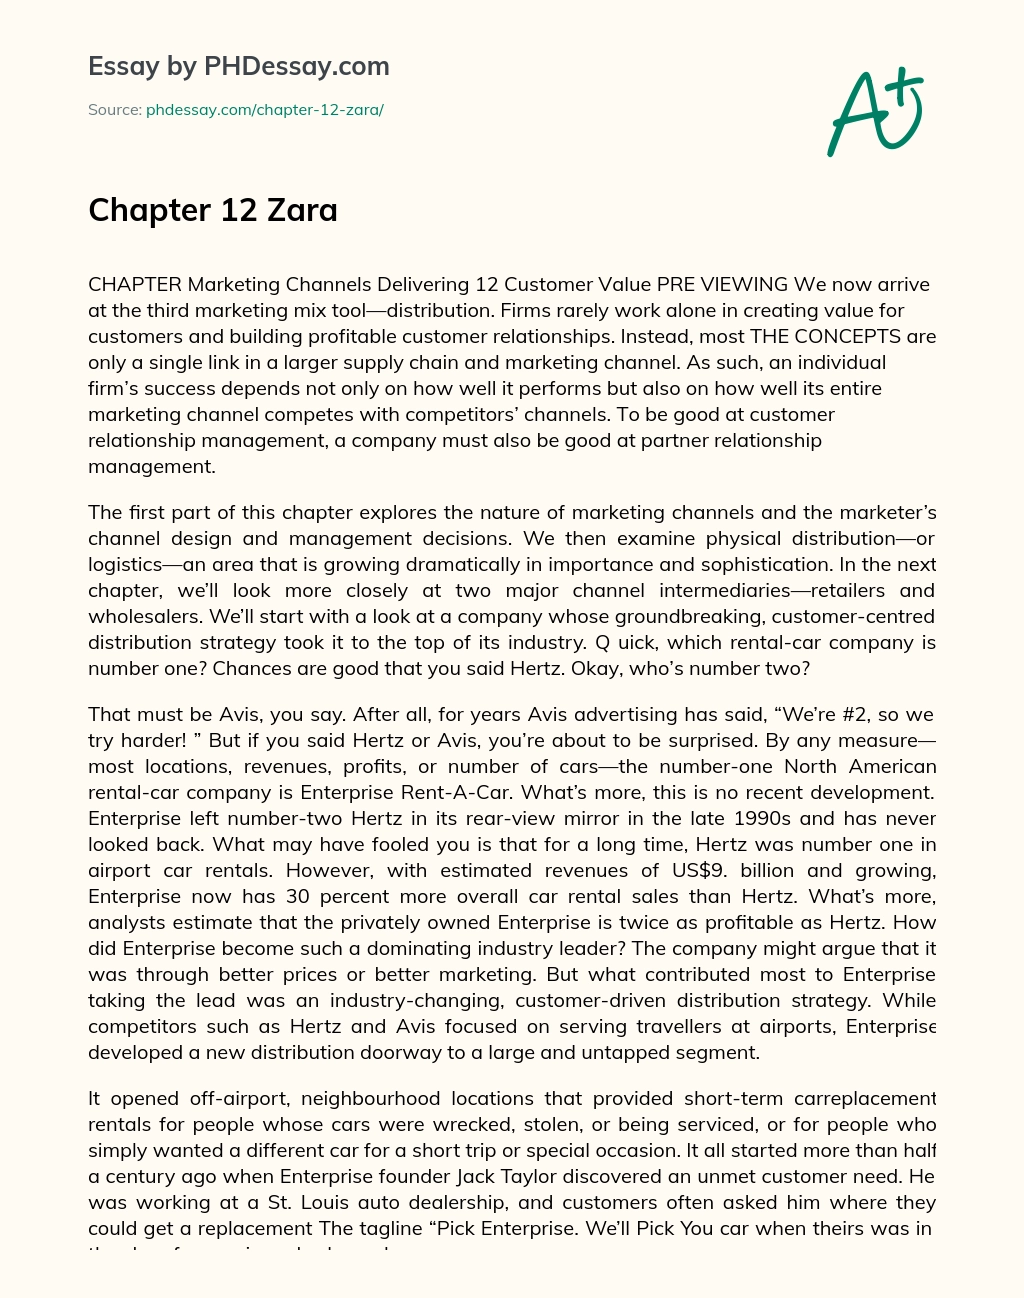 Chapter 12 Zara essay